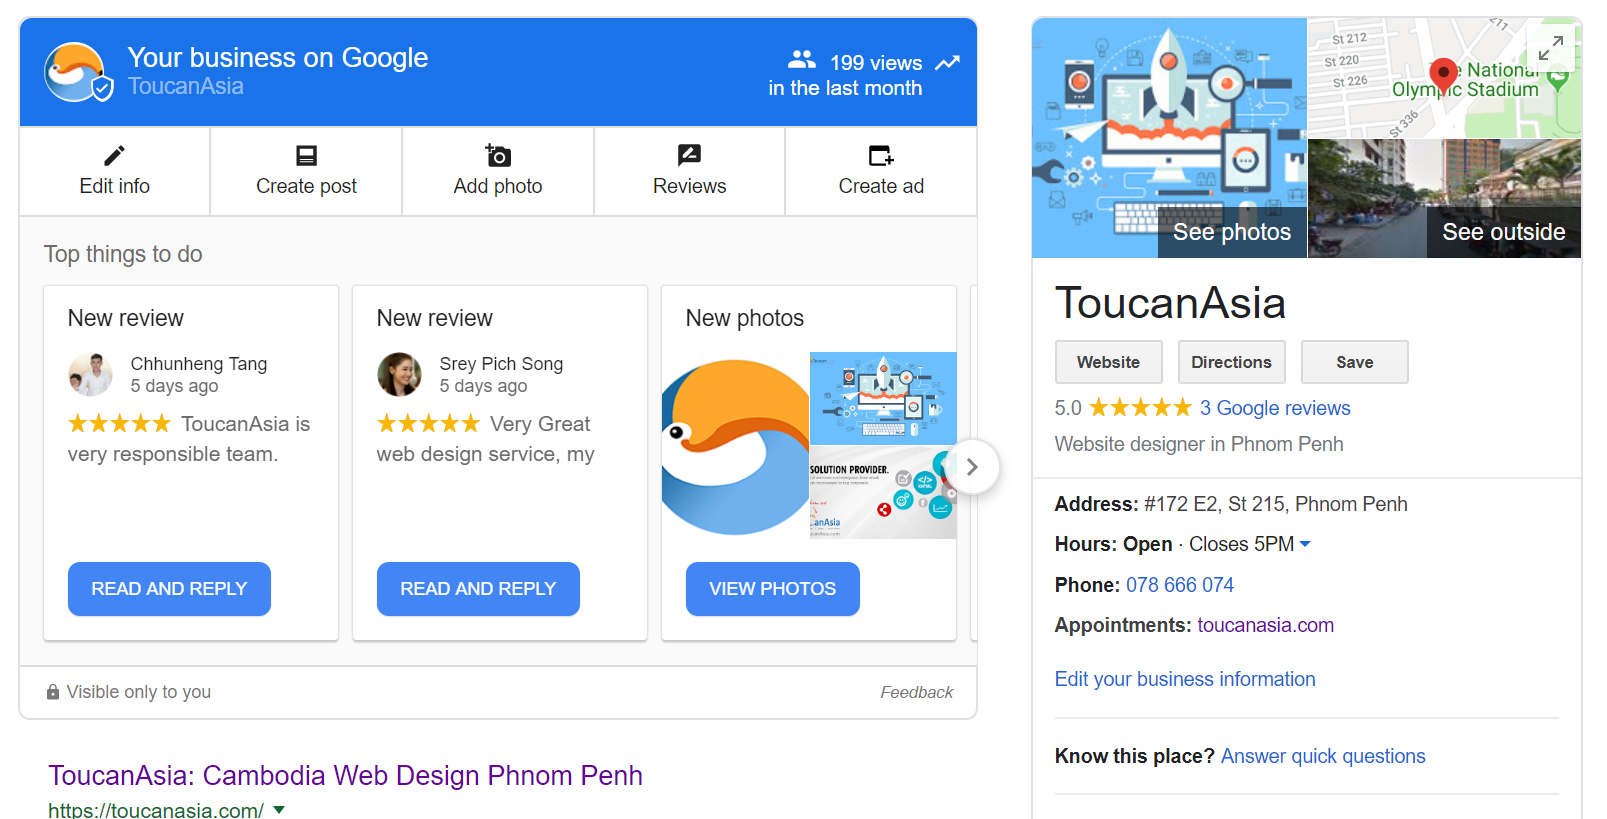 ToucanAsia on Google